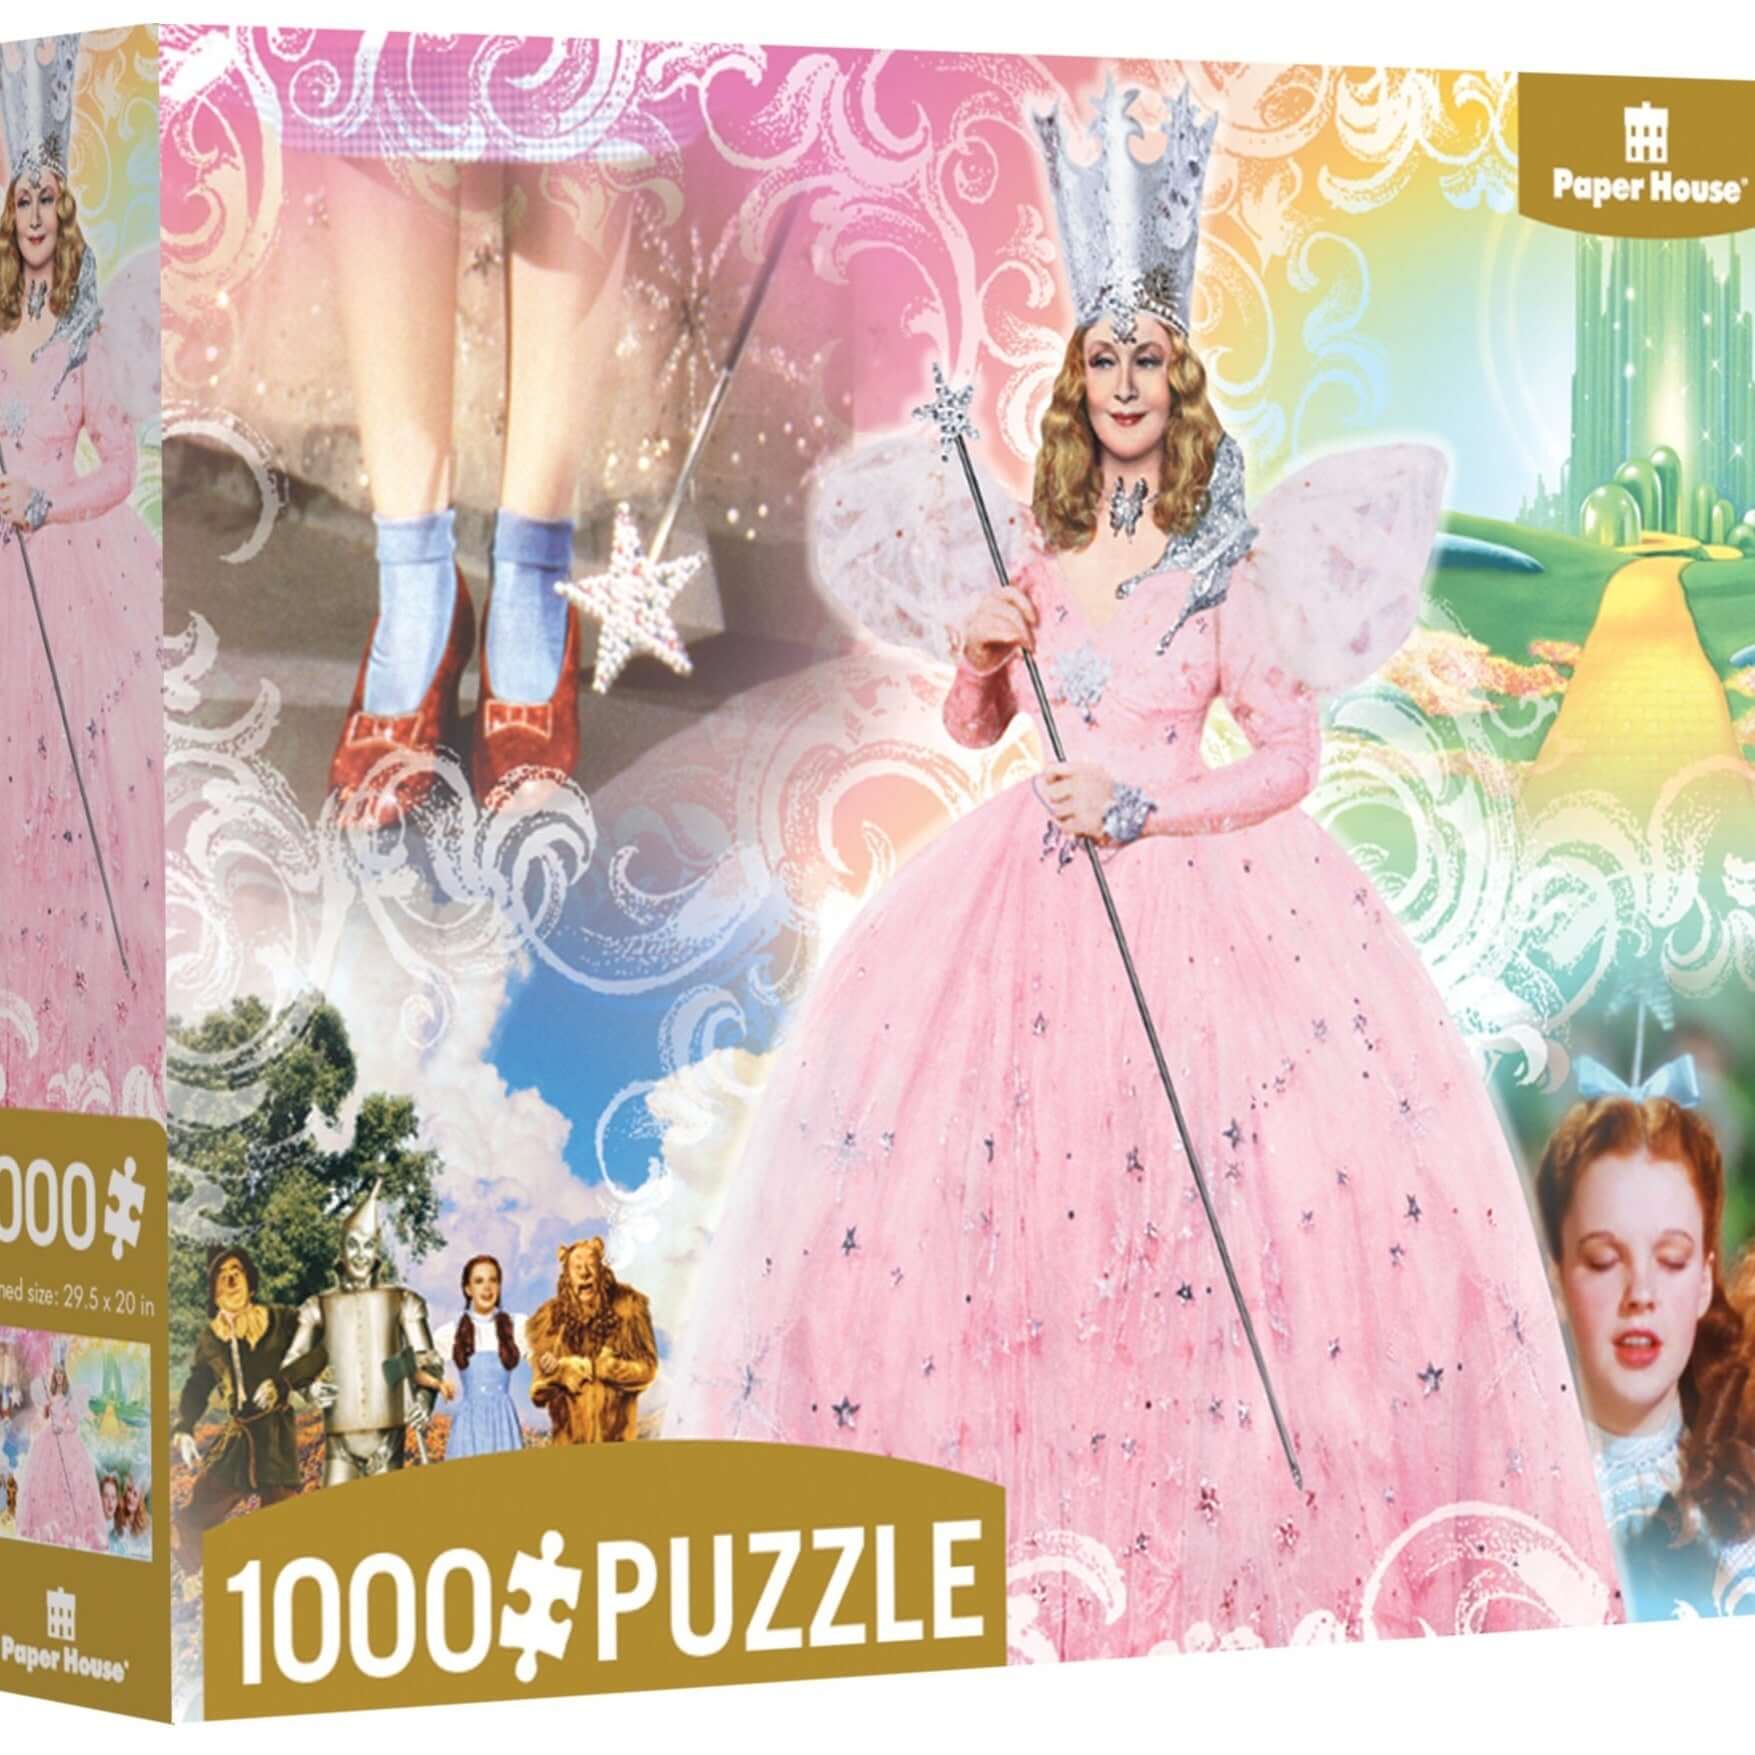 The Wizard of Oz Glinda the Good Witch 1000-piece Jigsaw Puzzle